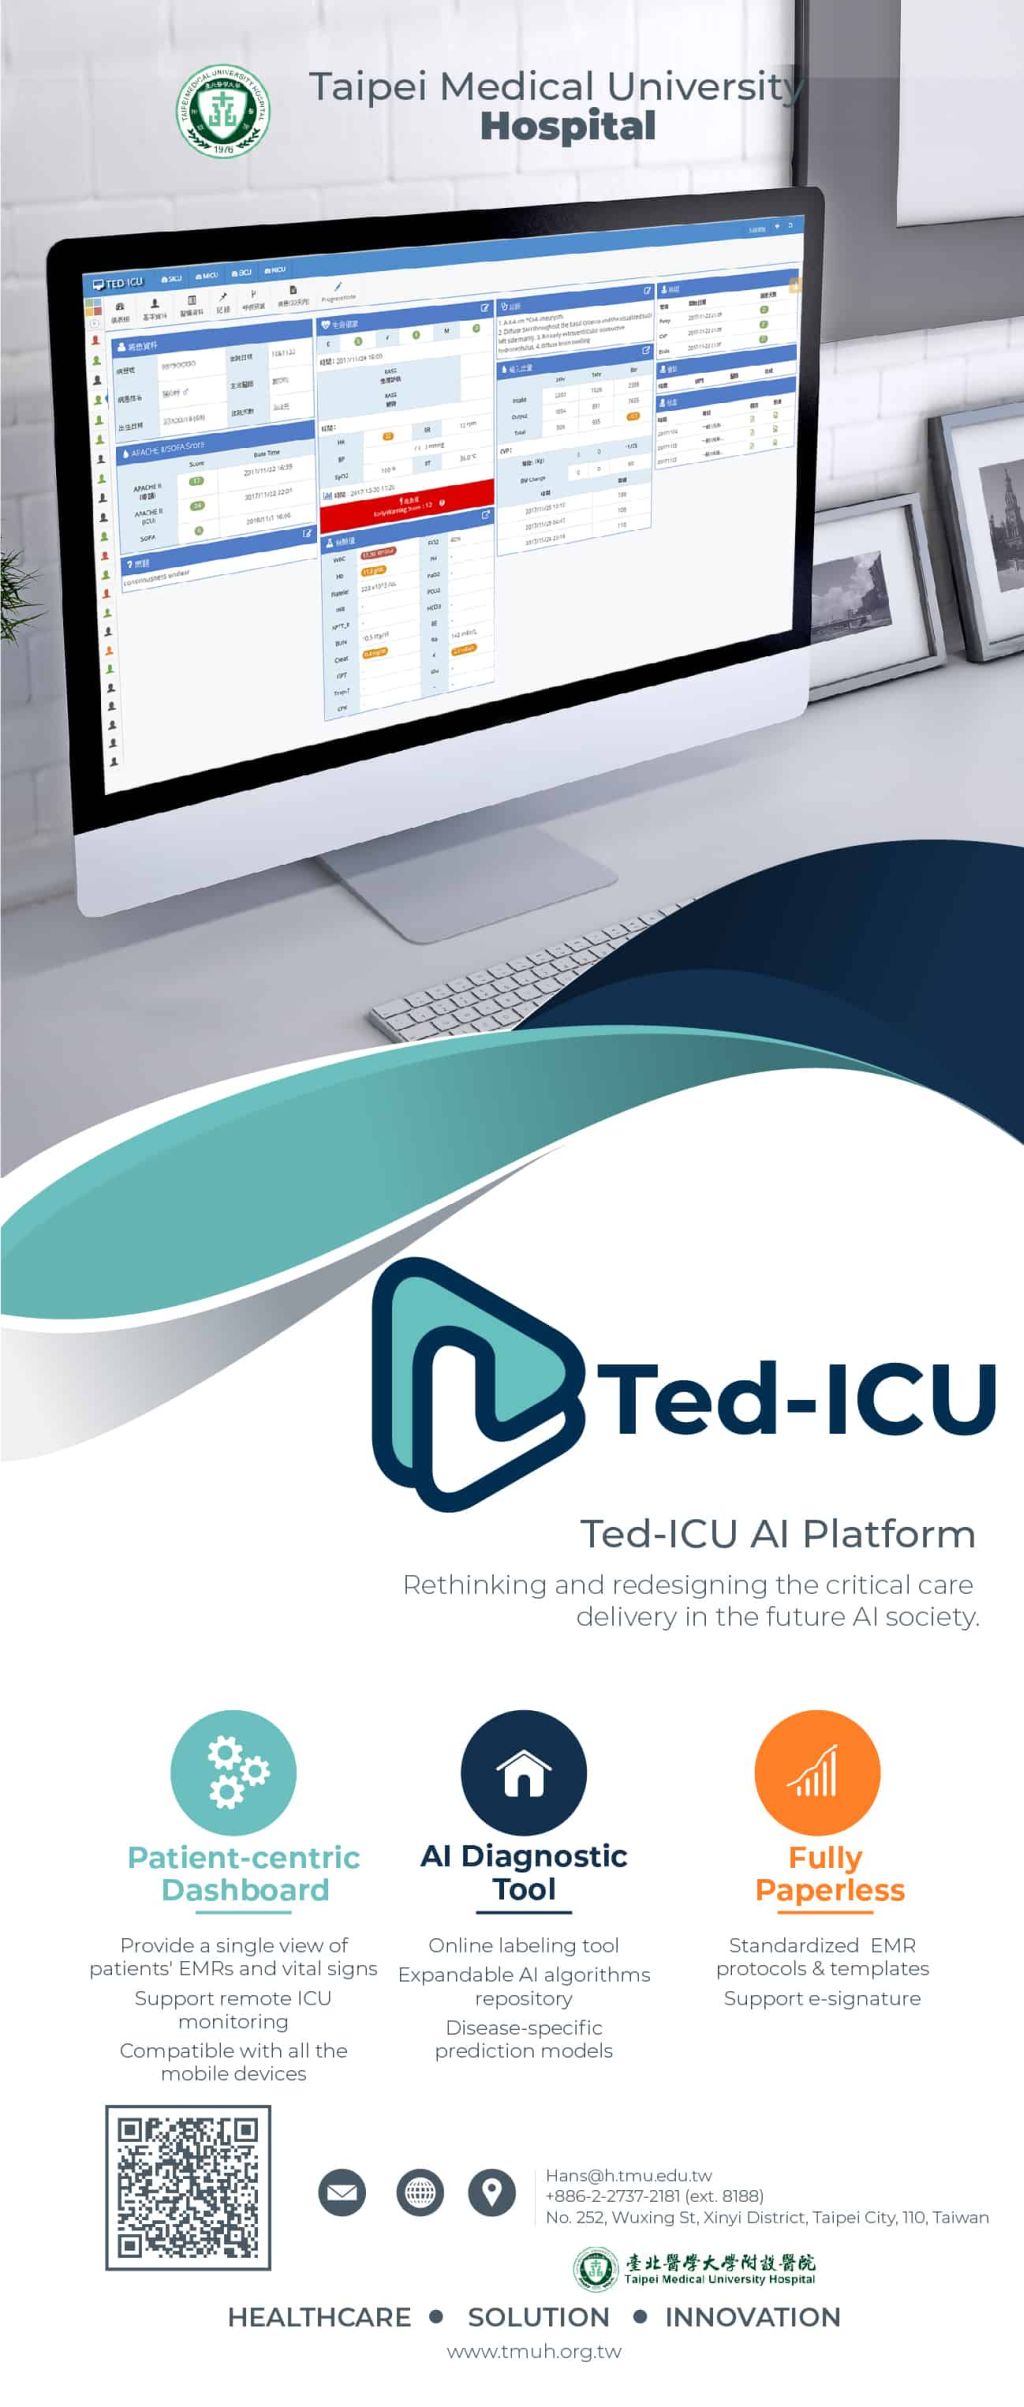 Ted-ICU AI Platform